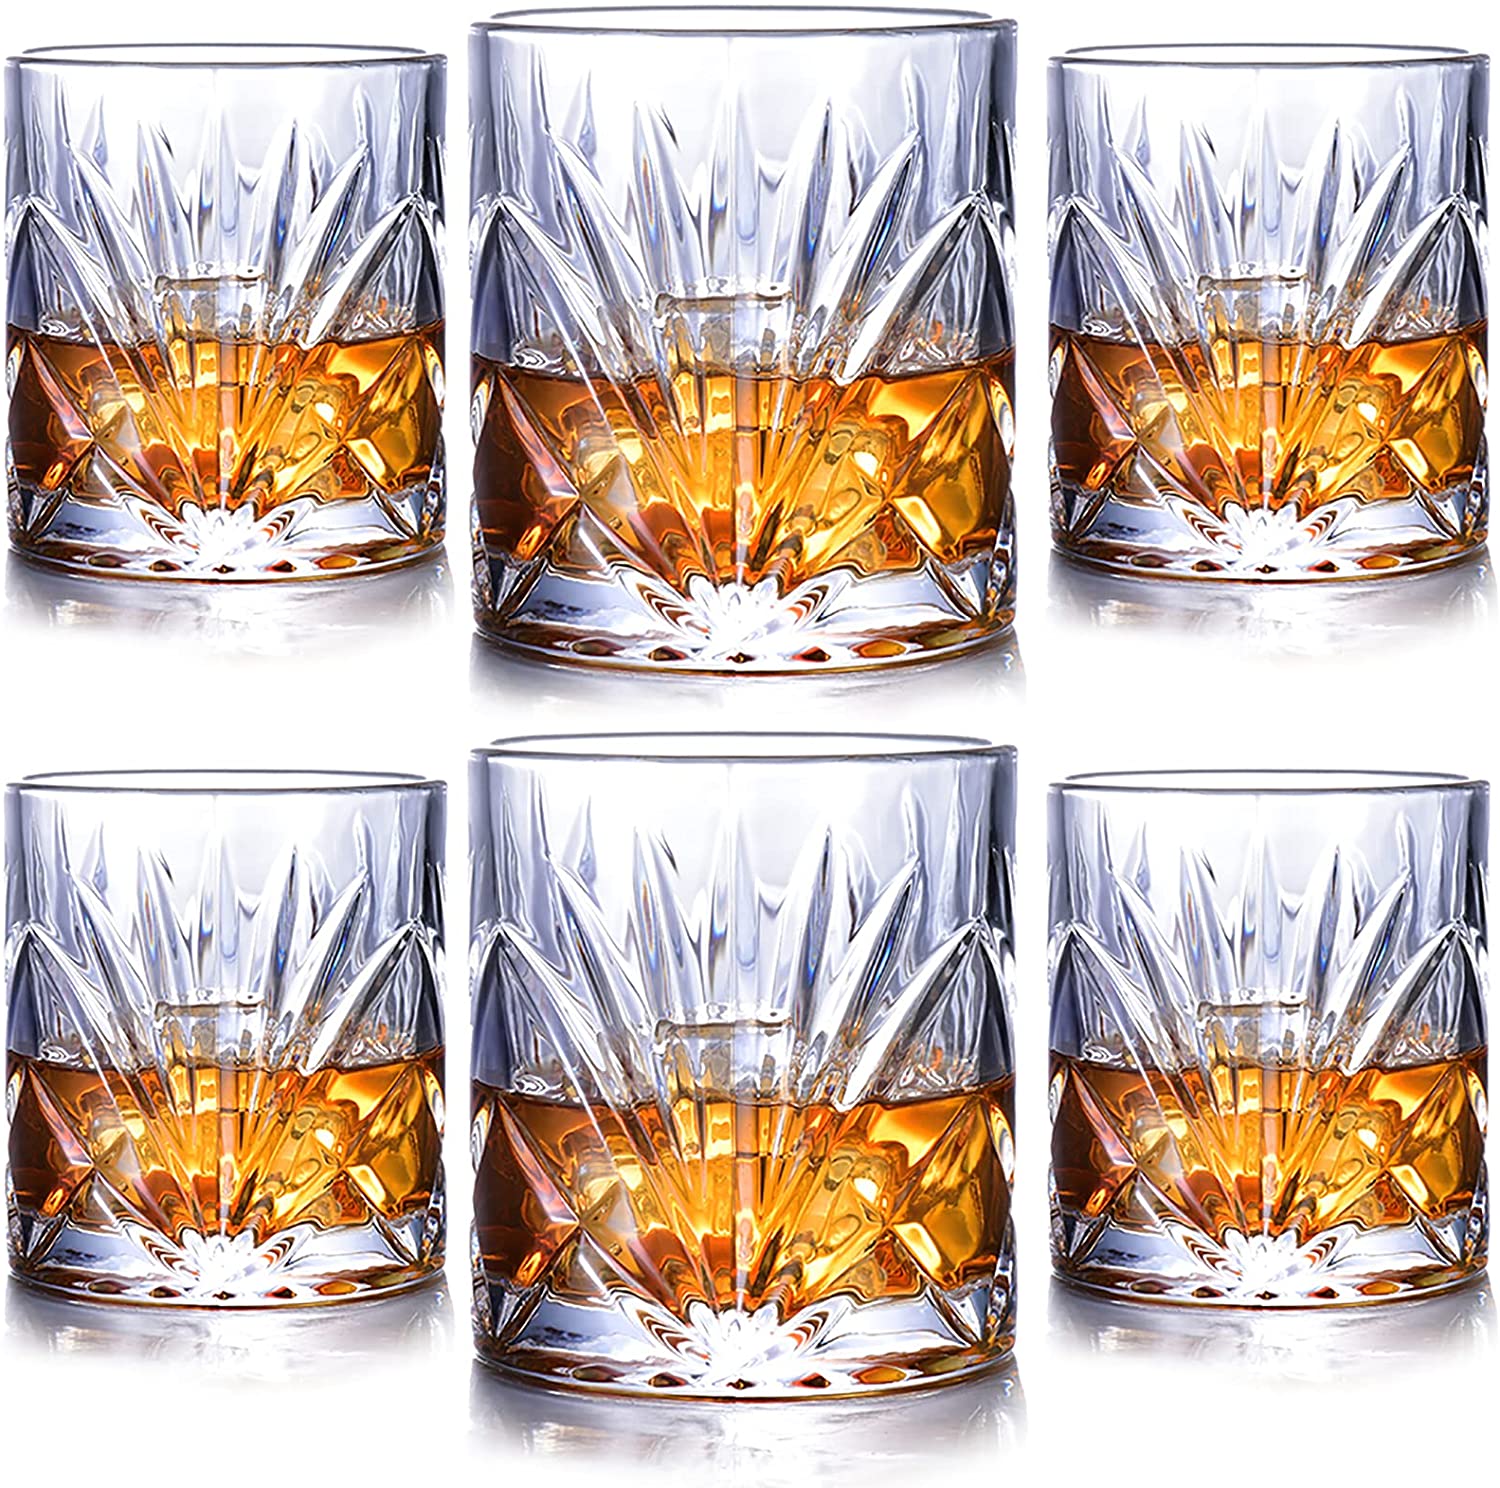 Whiskey Glasses Set of 6, 10oz Old Fashioned Crystal Bourbon Glass Rocks Glass Cocktail Tumbler Glasses Set - image 1 of 10